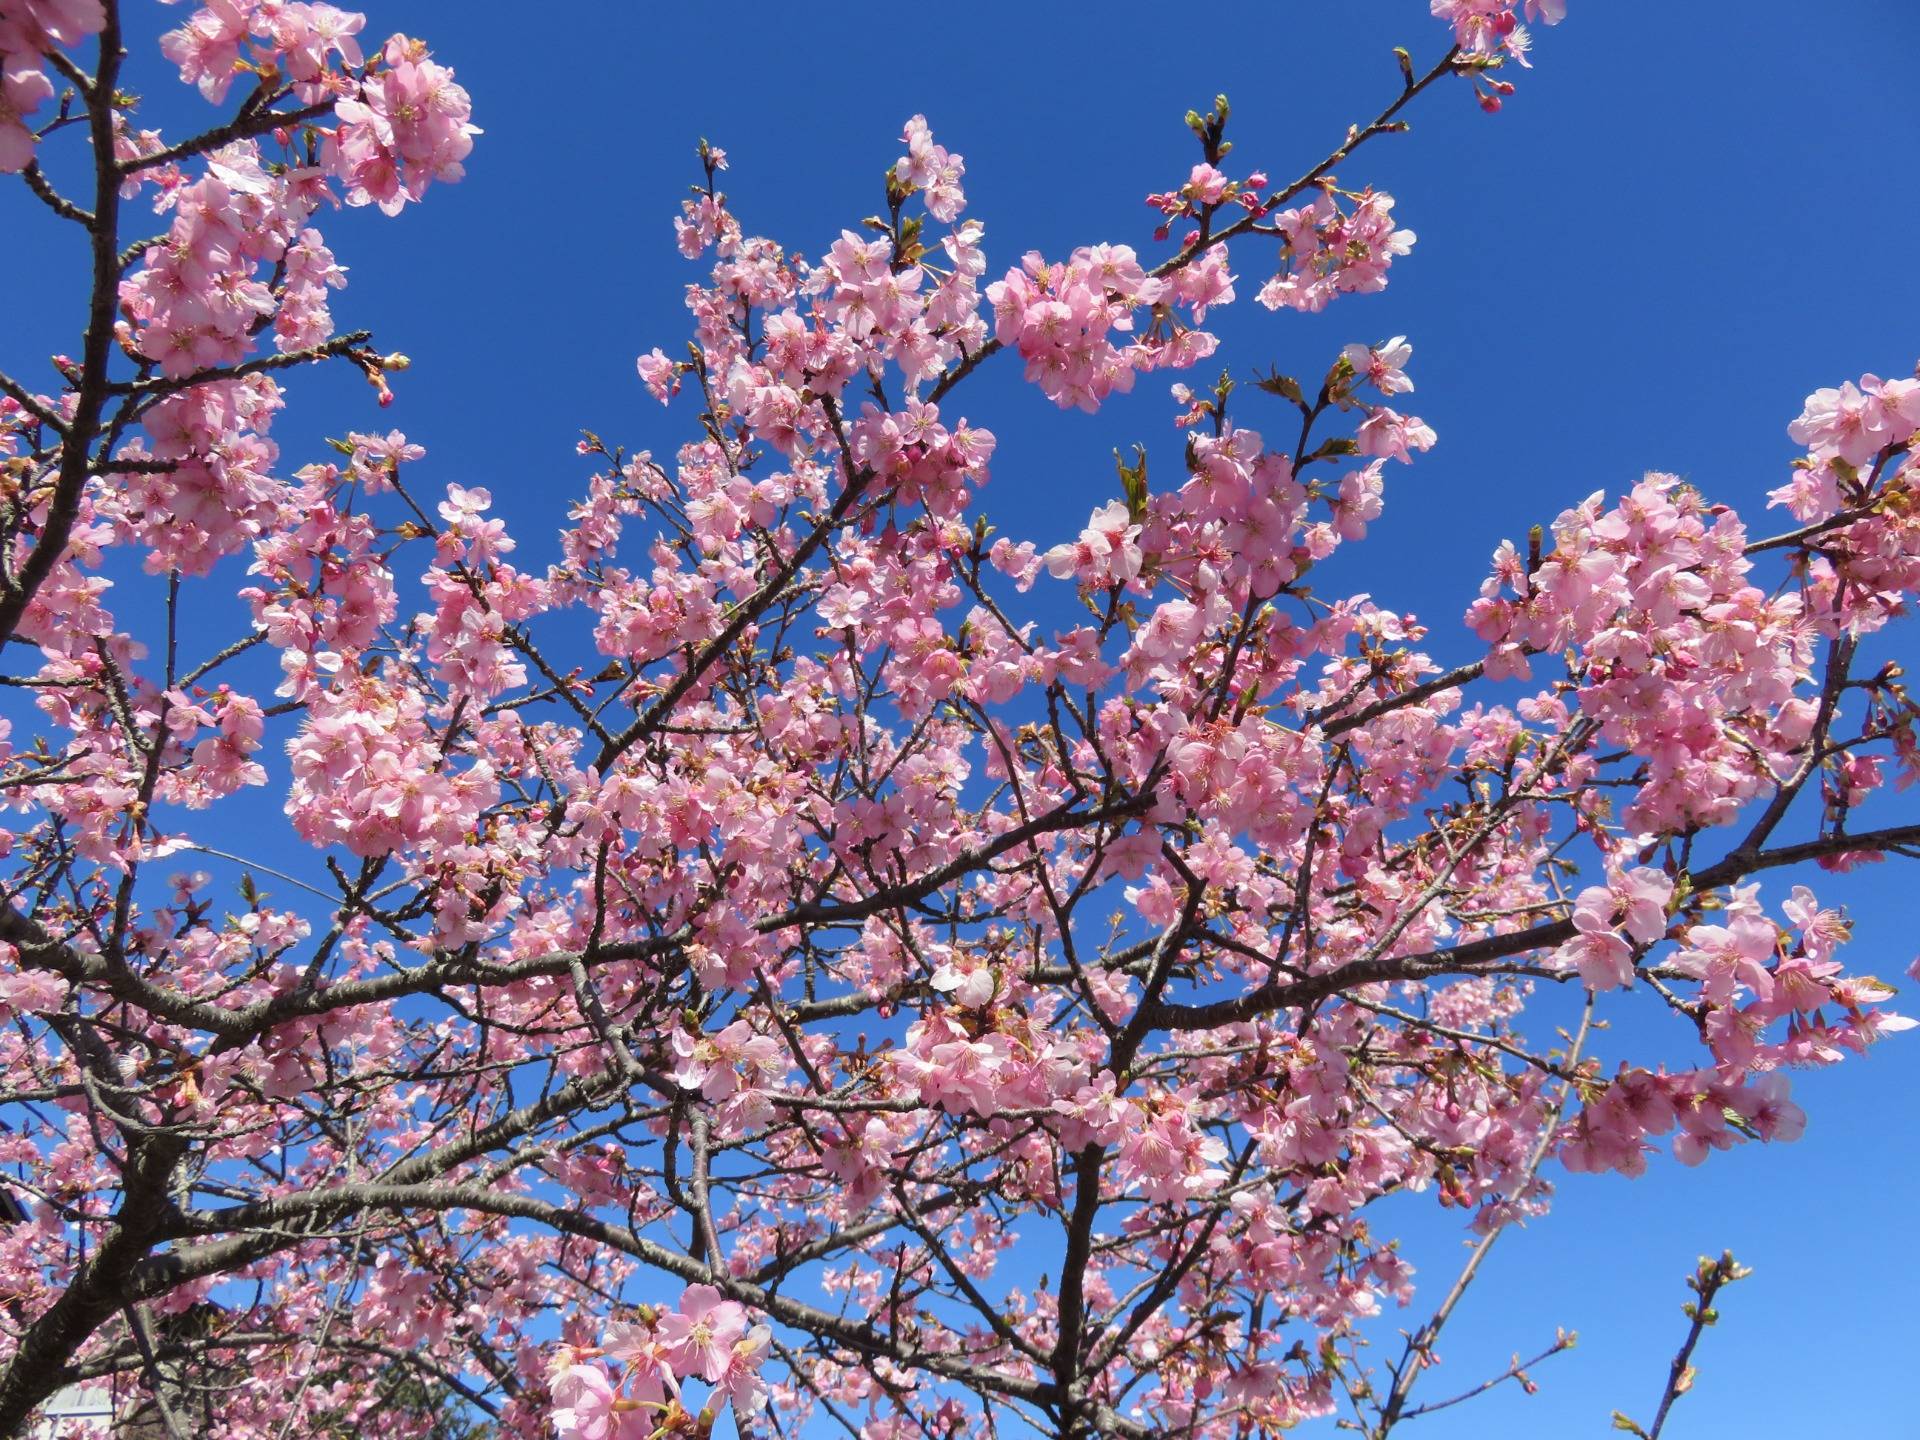 Kannami Cherry Blossom Festival
